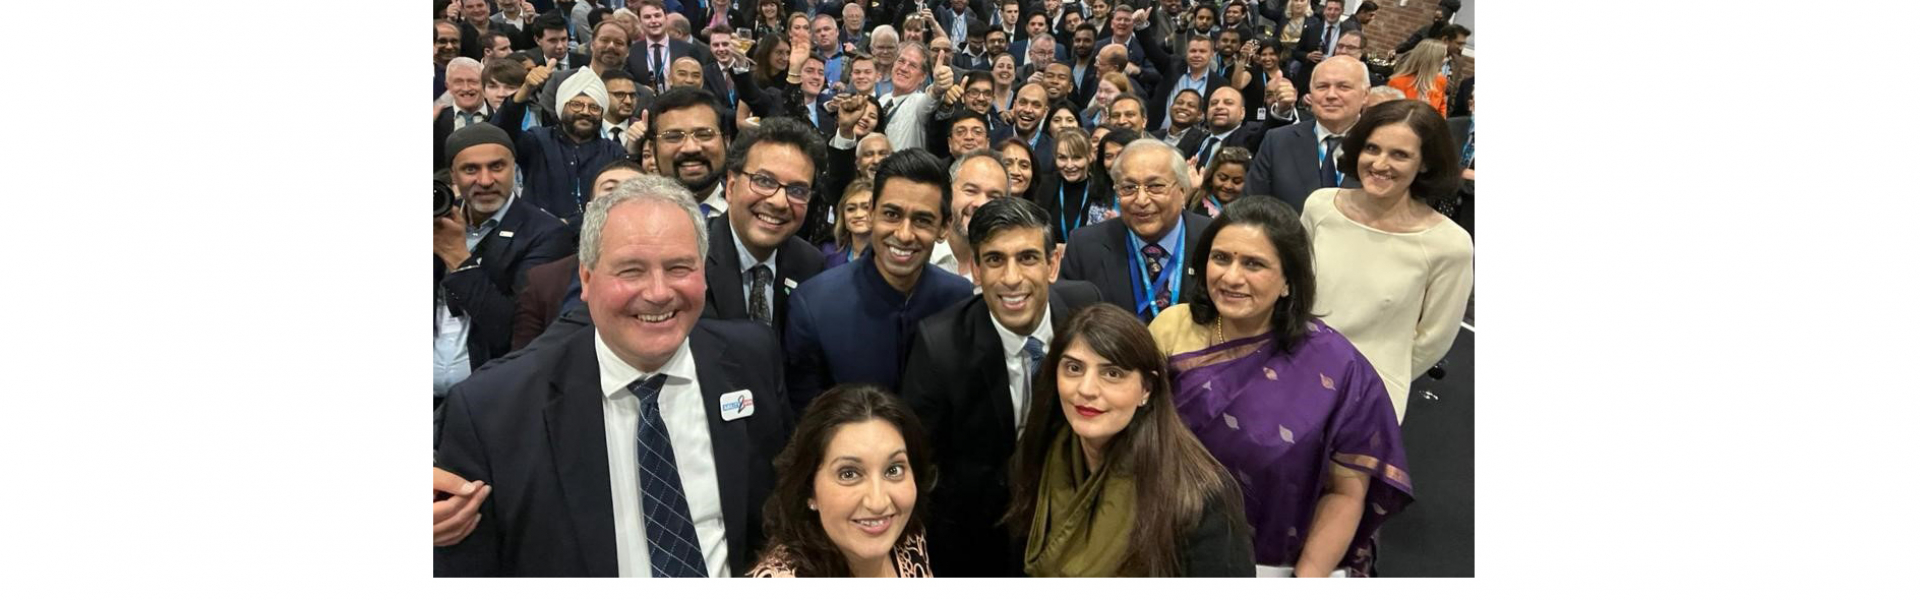 PM Rishi Sunak and his Conservative India friends